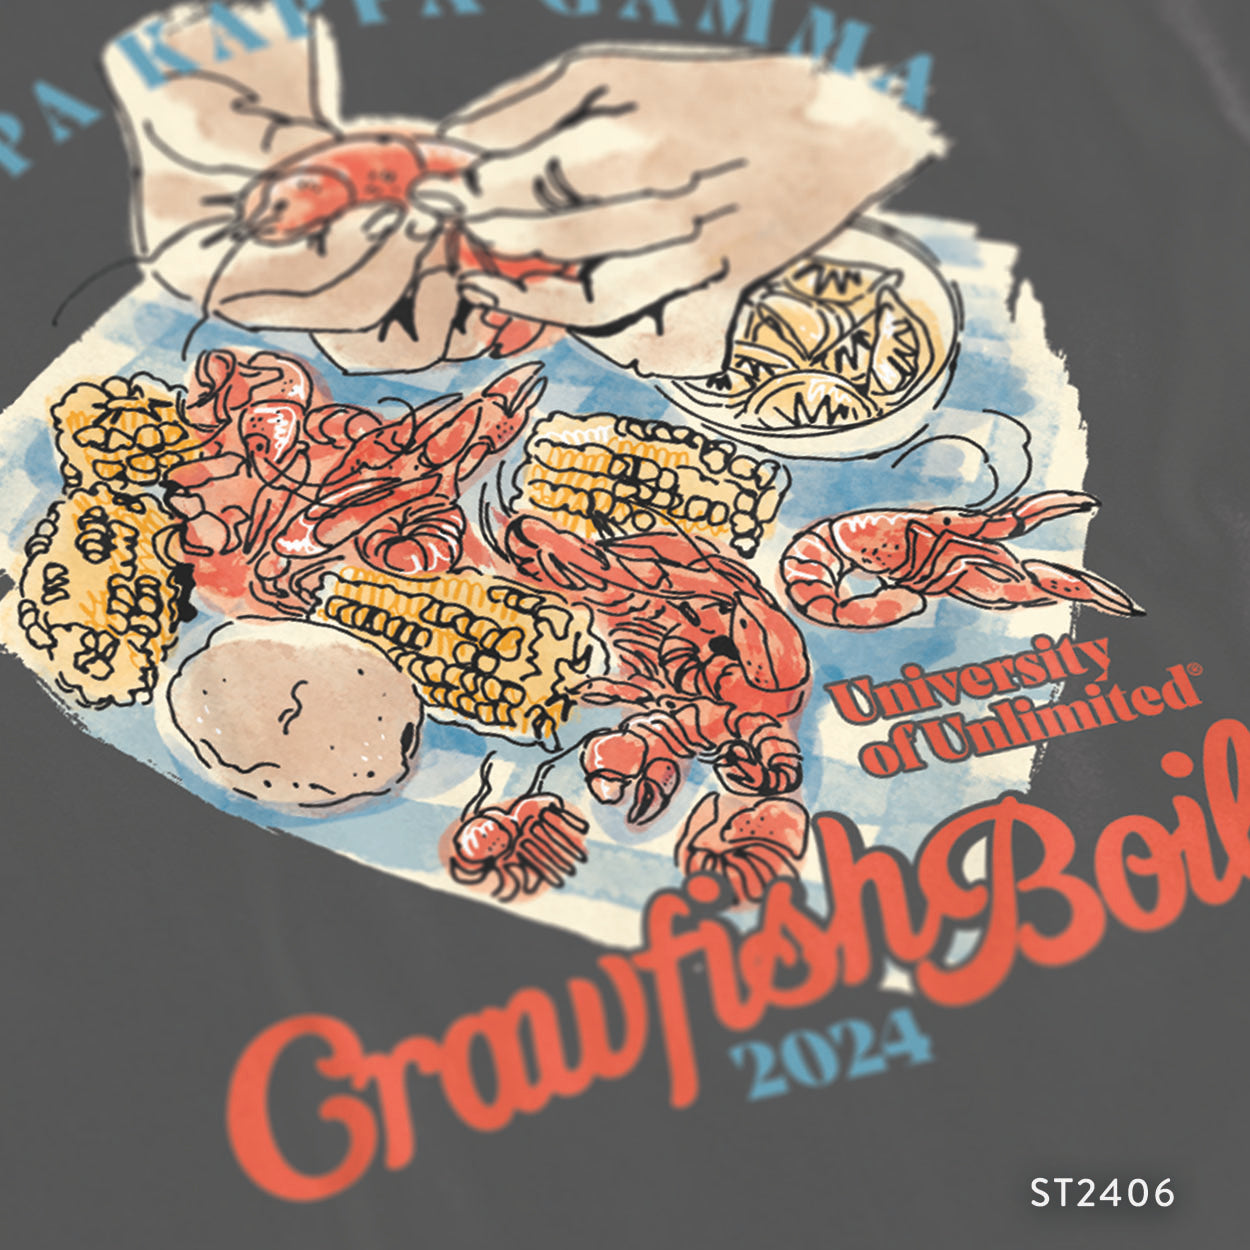 Kappa Kappa Gamma Crawfish Boil T-Shirt Design